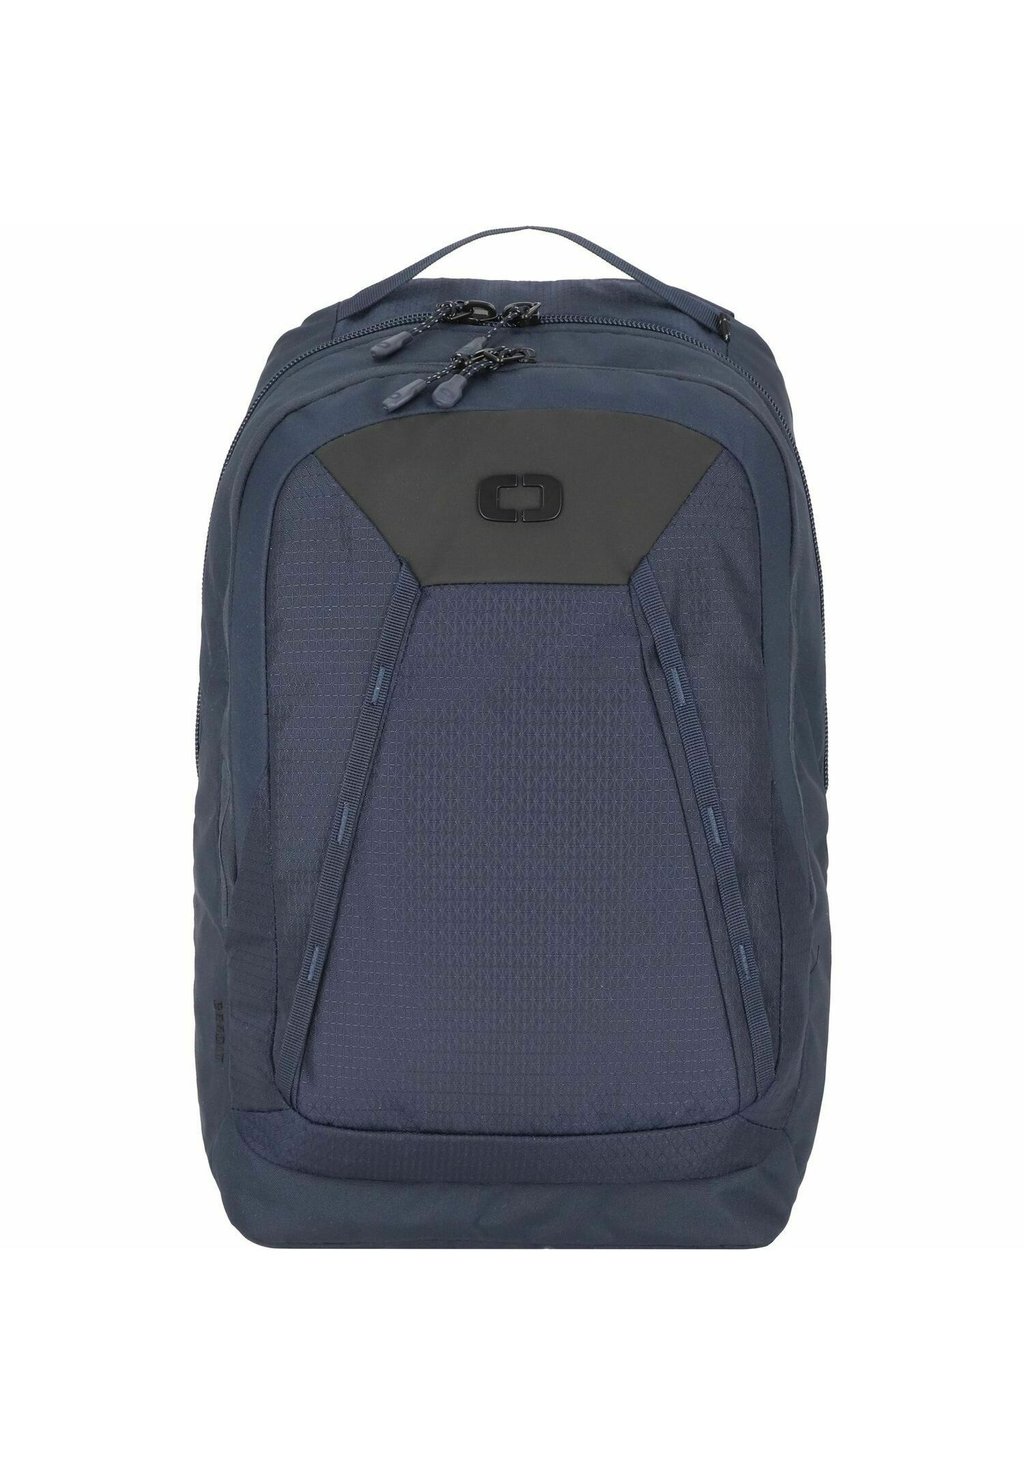 Рюкзак Bandit Pro 51 Cm Laptopfach Ogio, цвет navy рюкзак ogio bandit pro 51 cm laptopfach темно синий